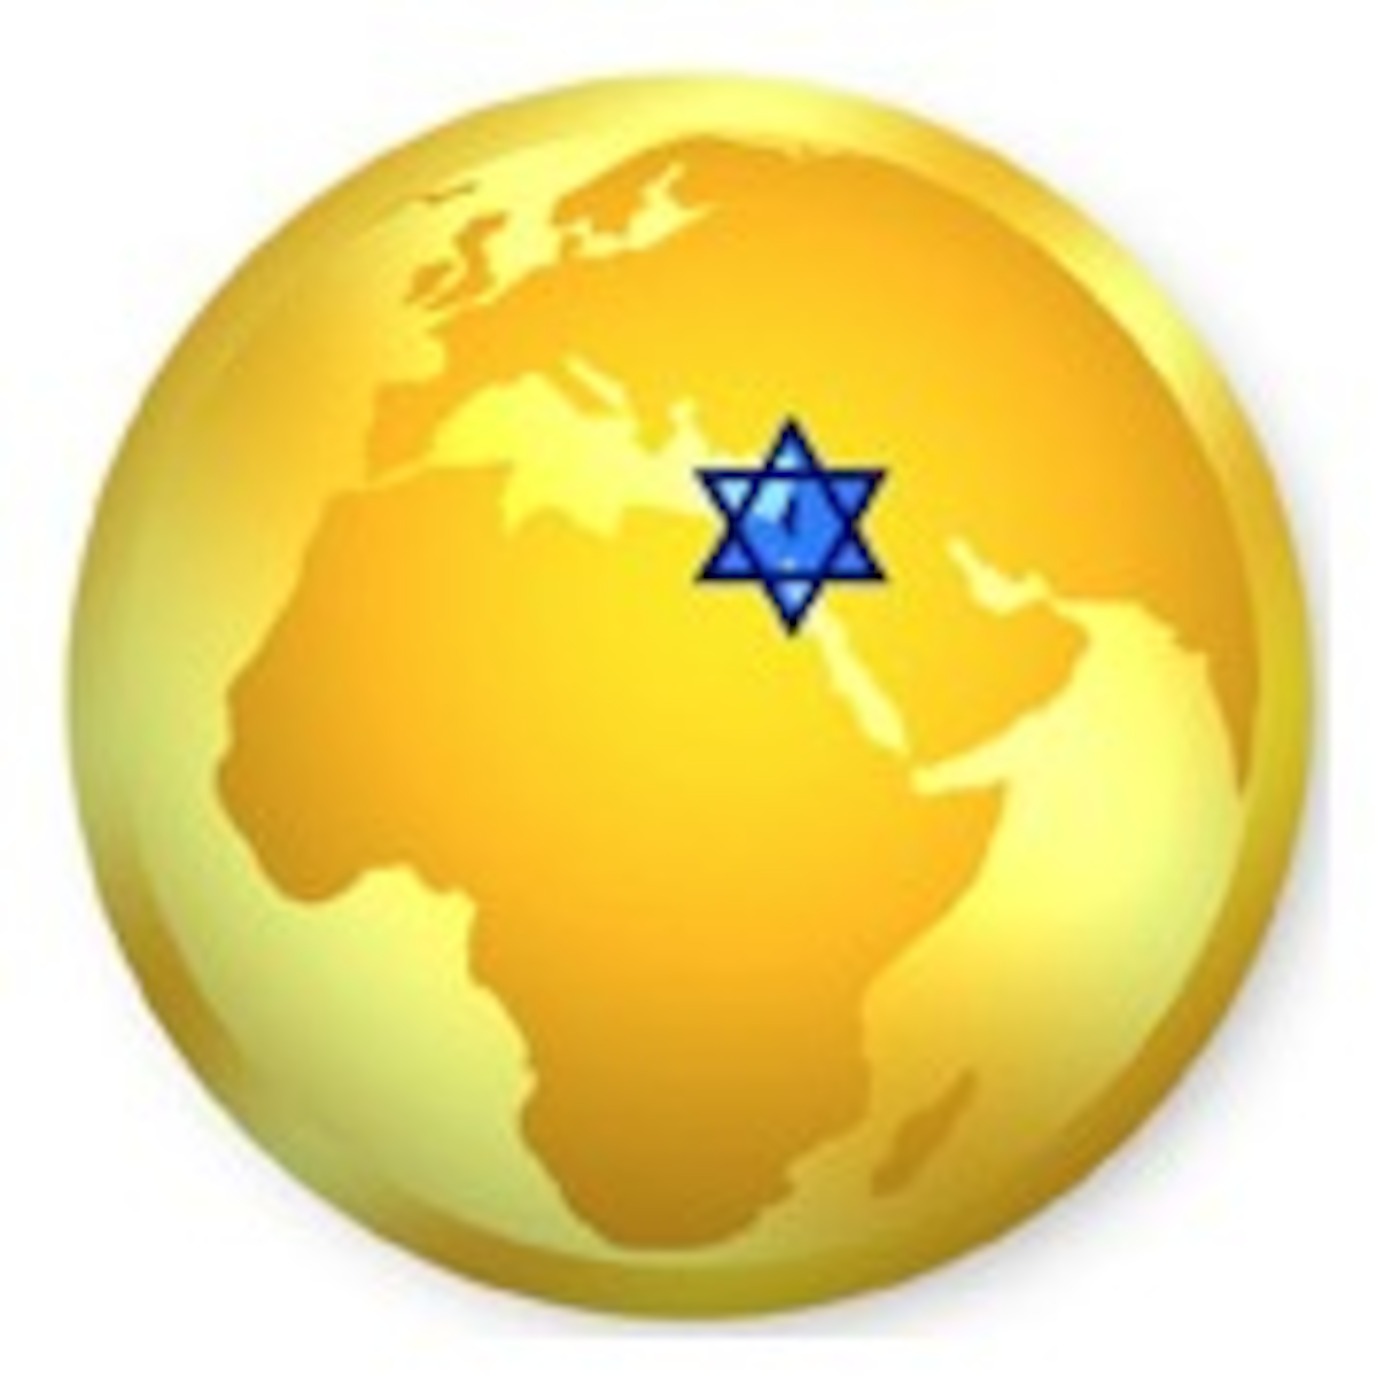 Hidden Treasure 4/7 - Libels, lies, replacement theology and anti-semitism